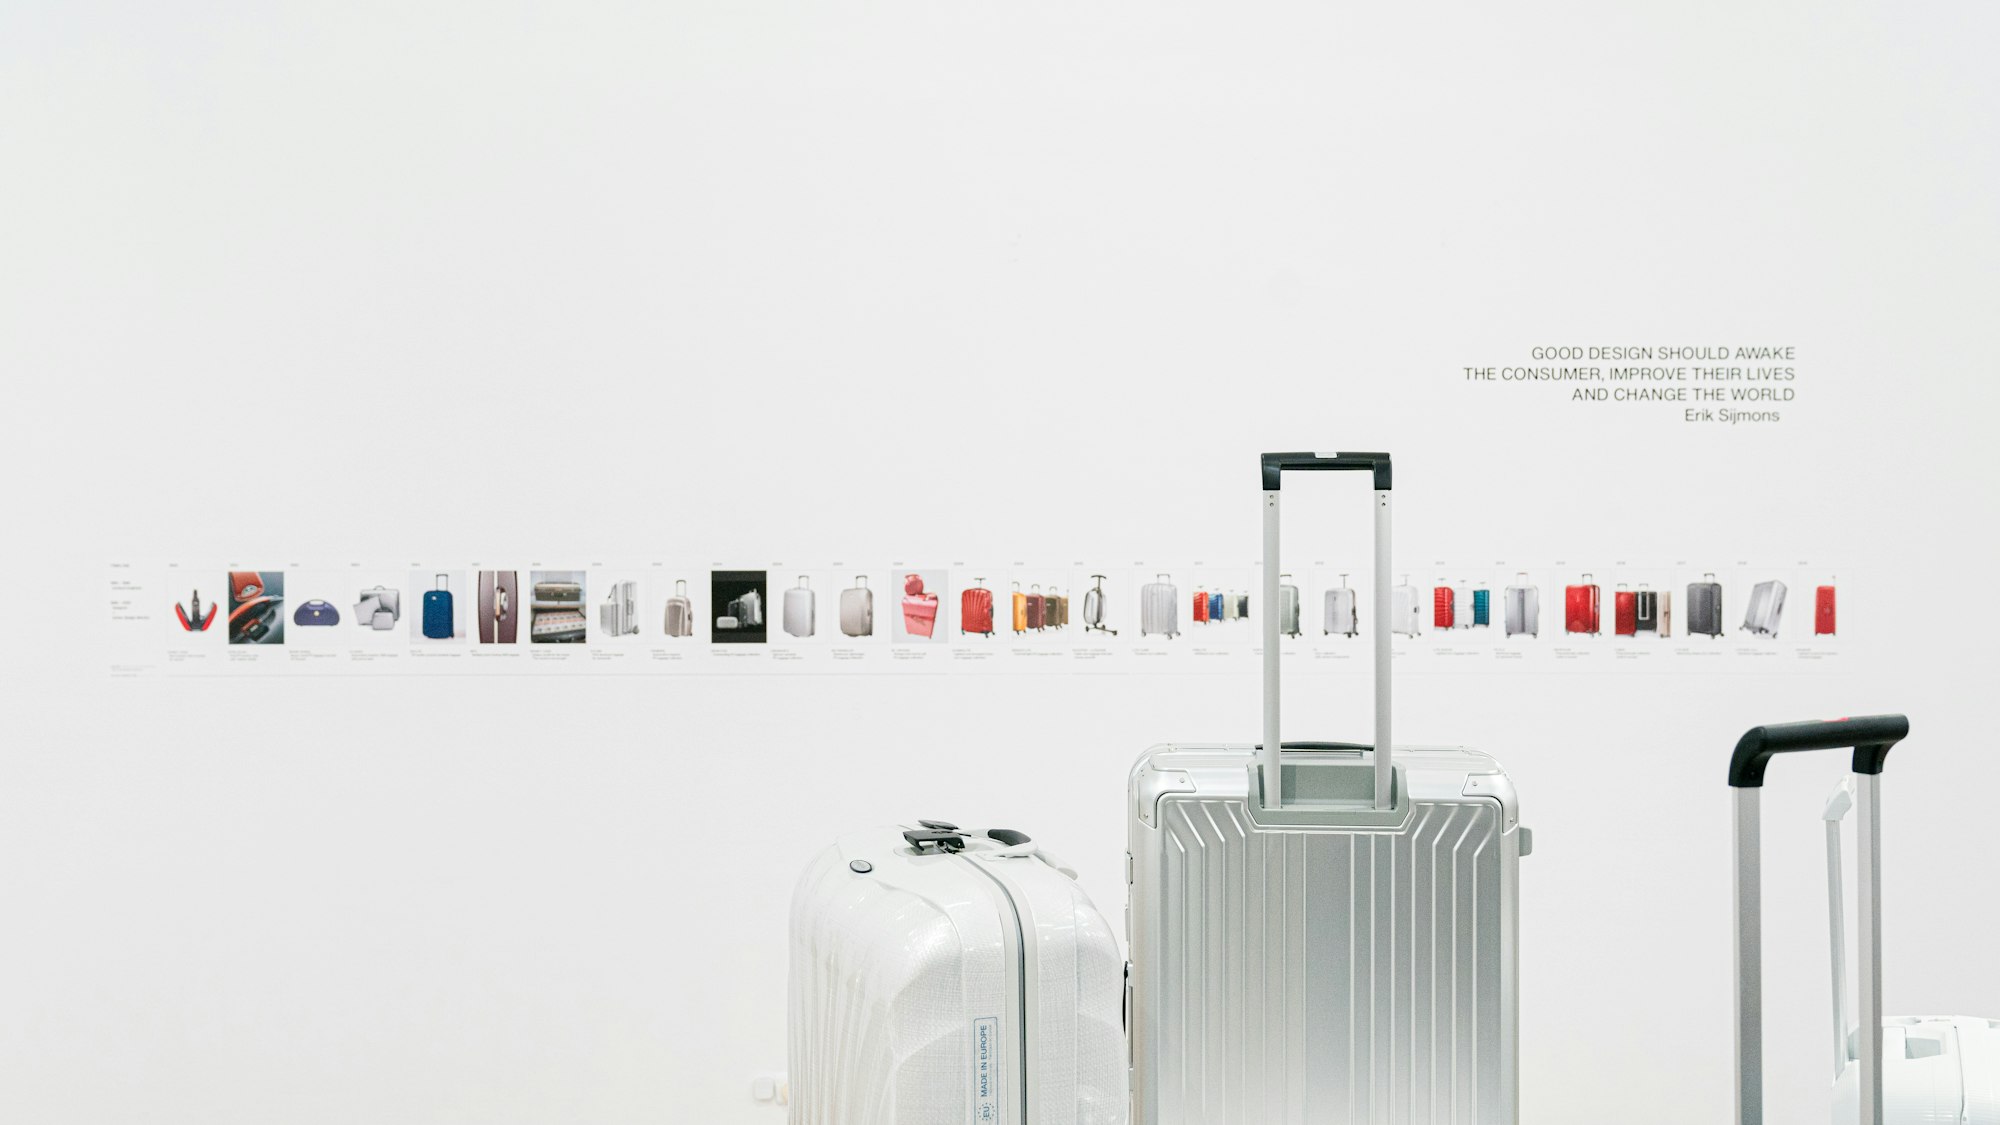 Samsonite suitcases displayed at the exhibition